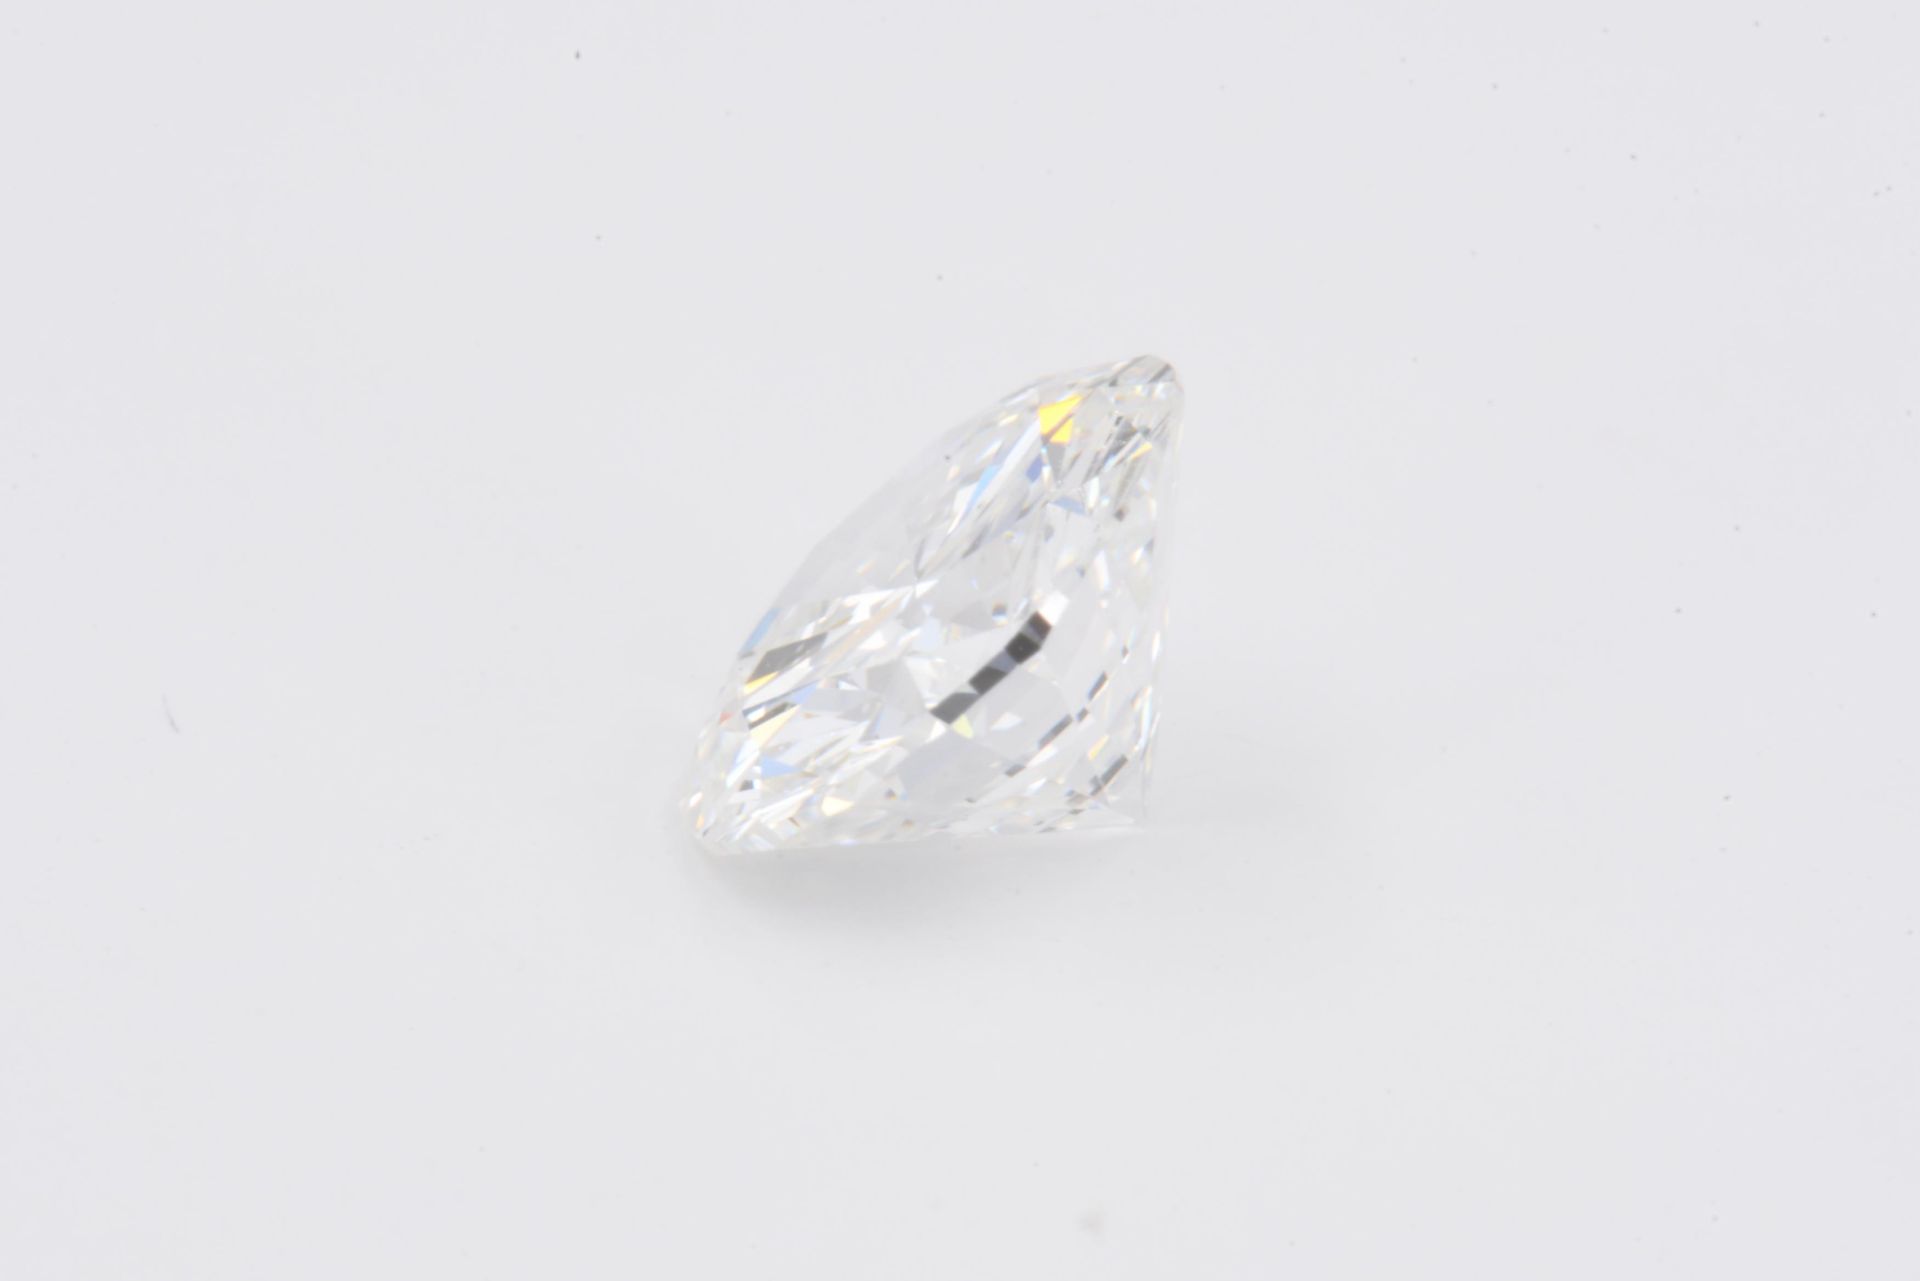 Unmounted Brilliant-cut diamond - Image 3 of 4